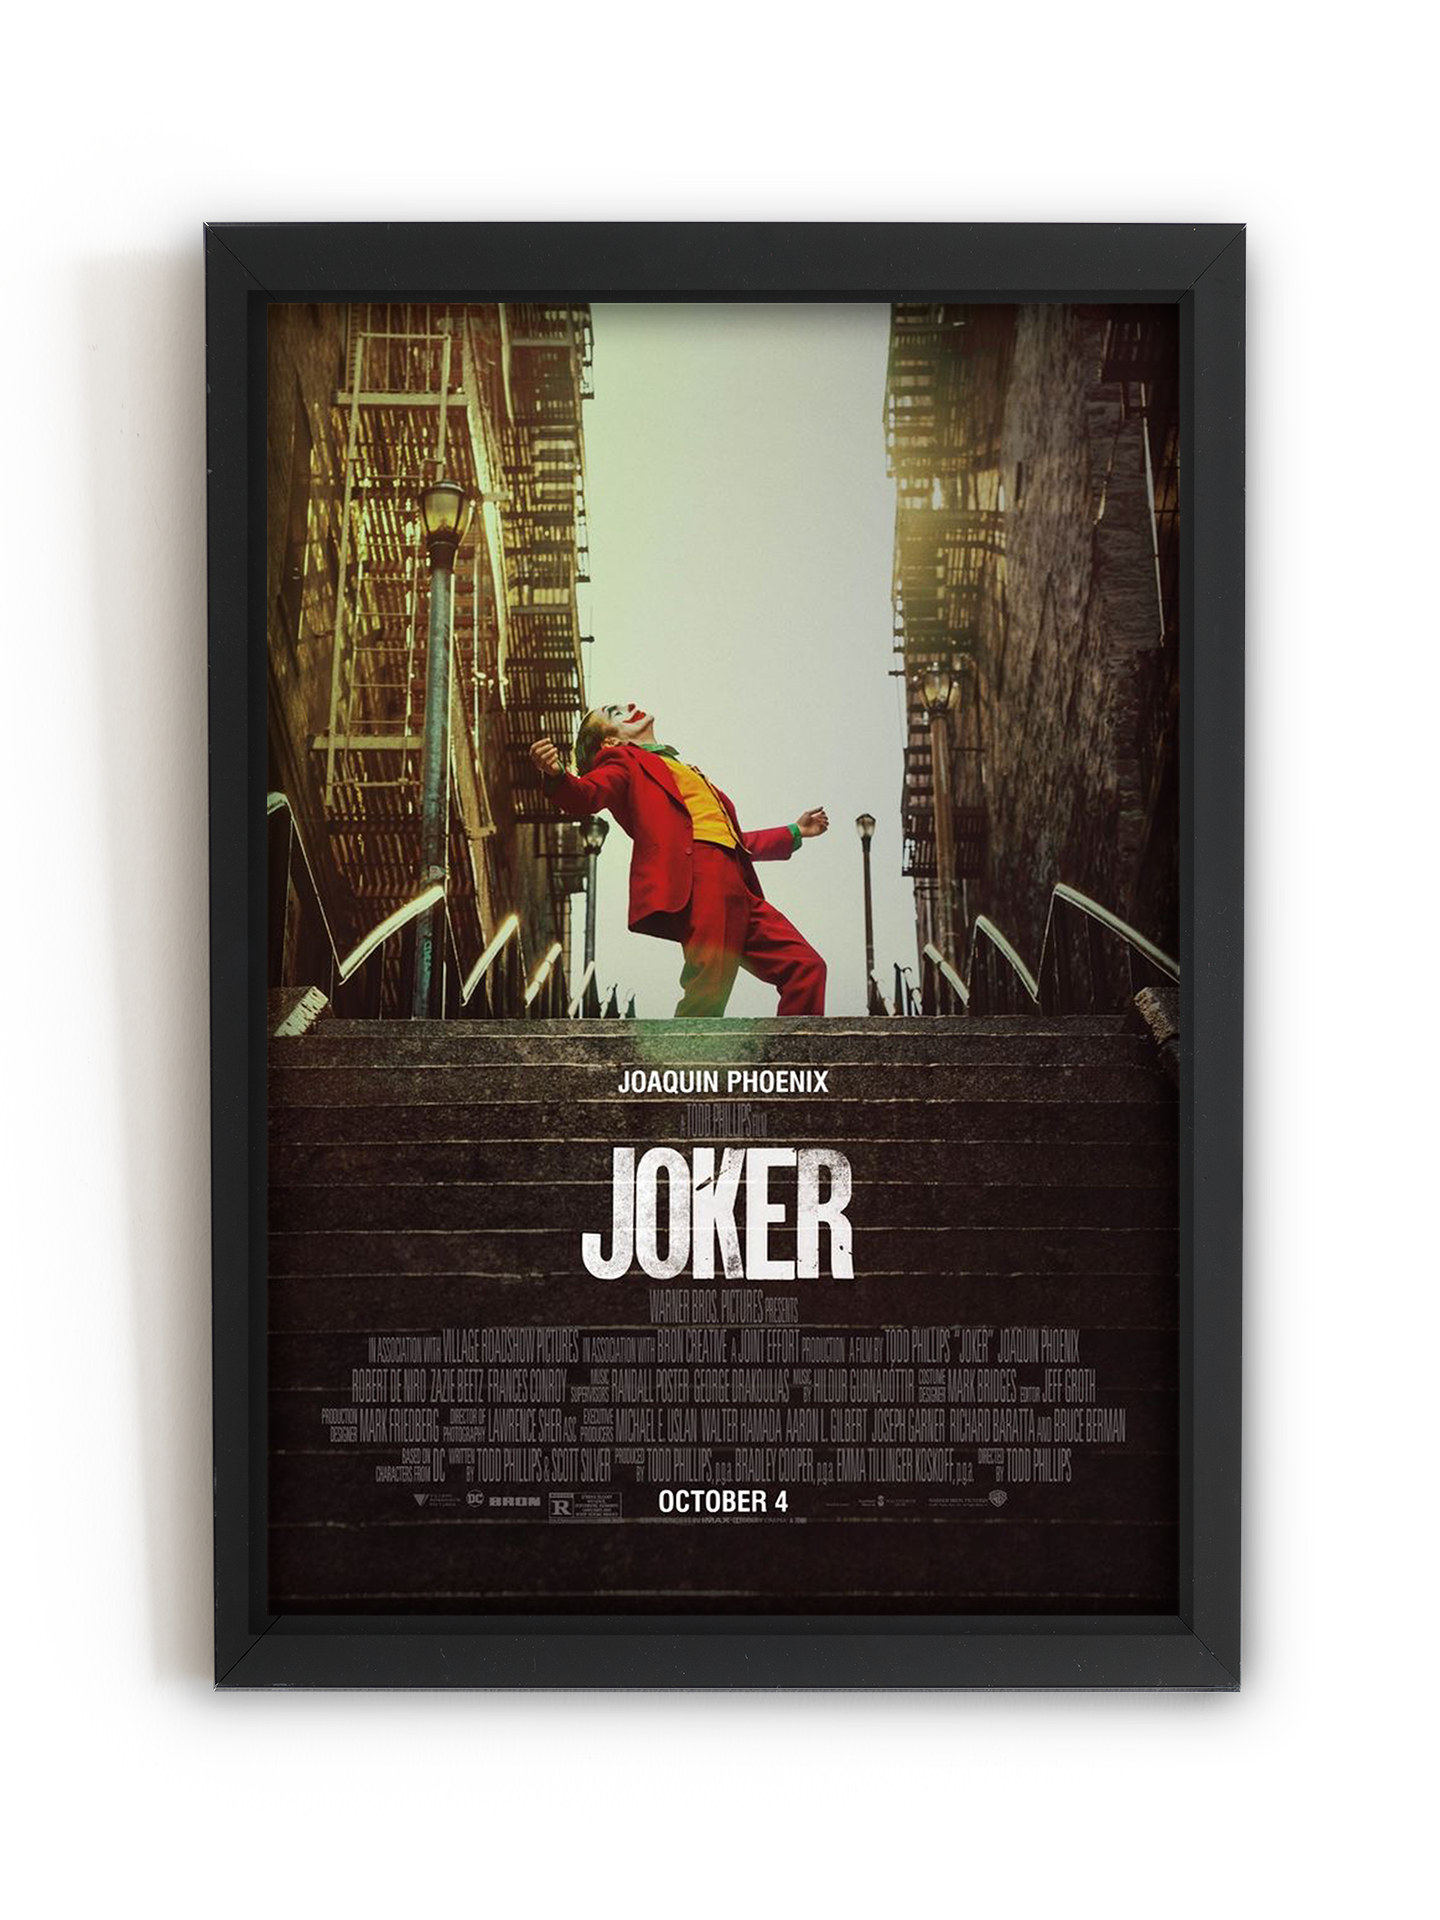 Joaquin Pheonix - The Joker